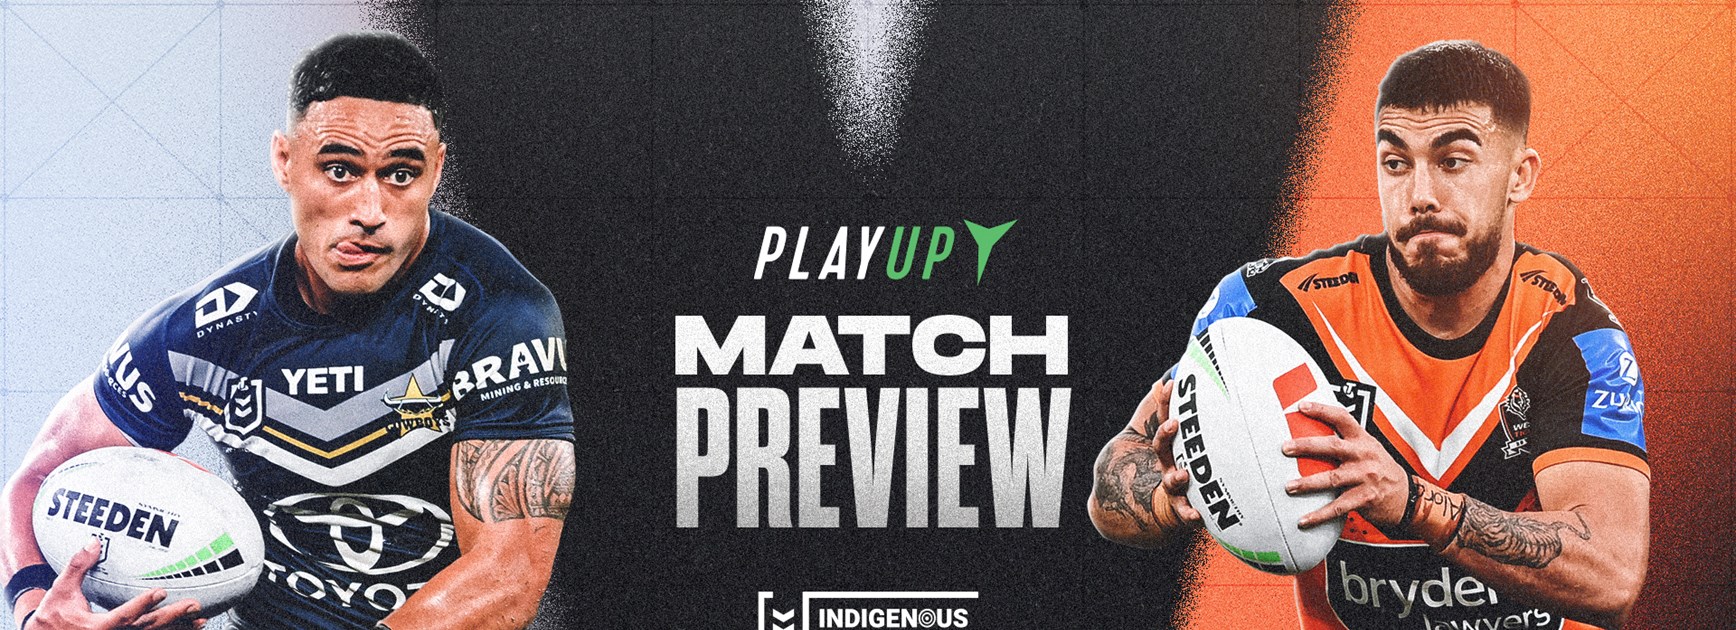 Match Preview: Round 12 vs Cowboys